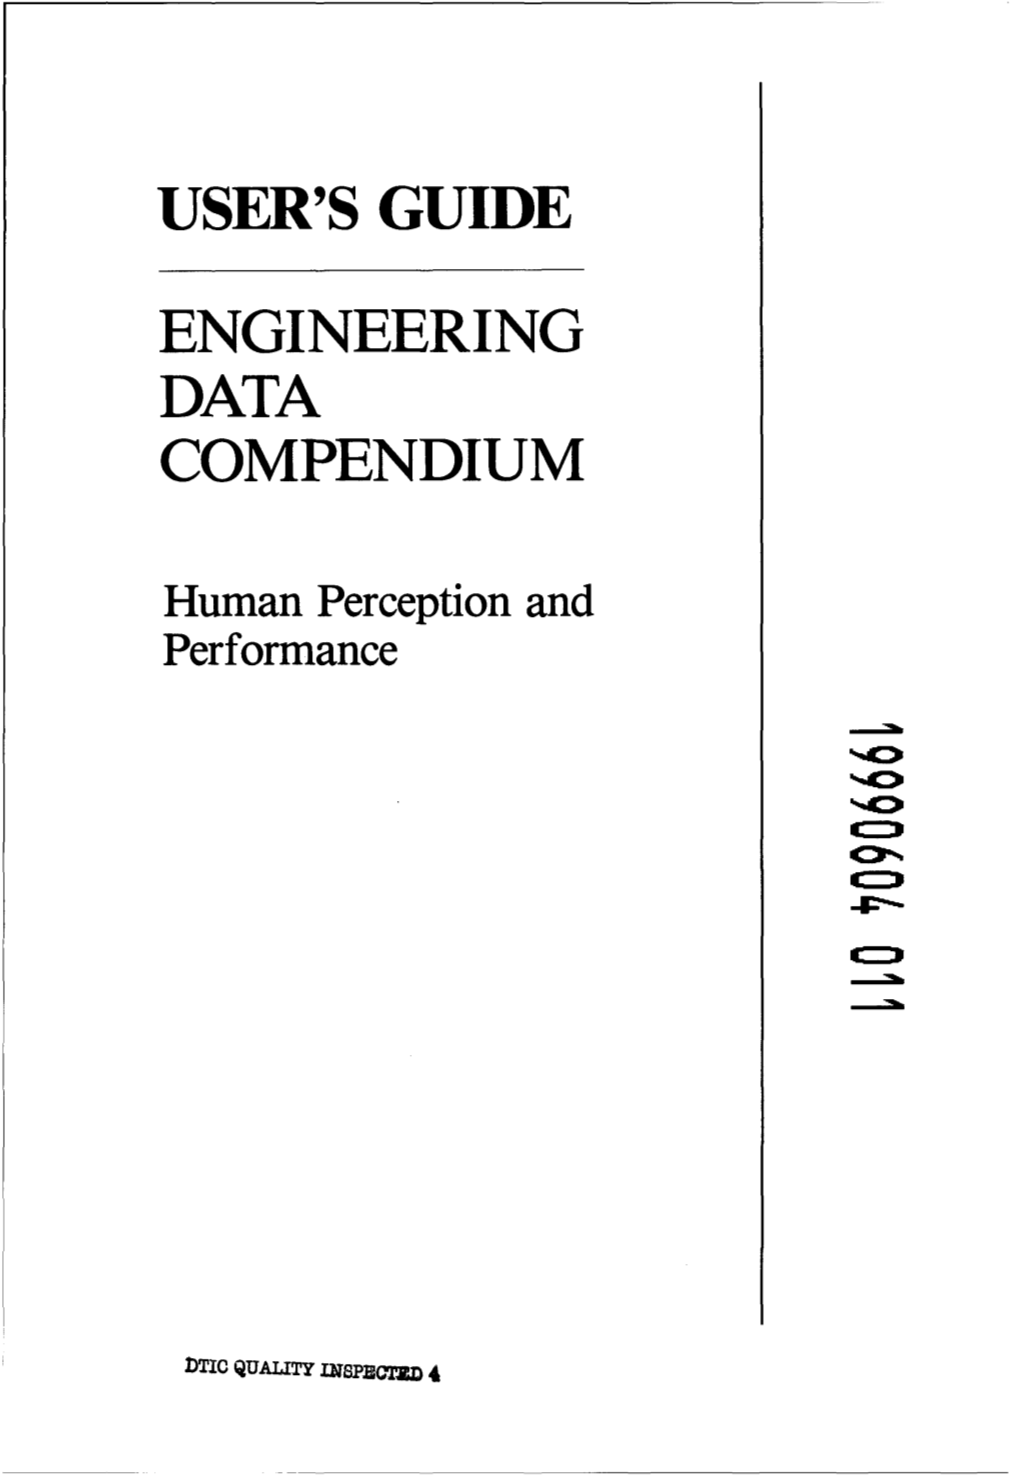 User's Guide Engineering Data Compendium Human Perception